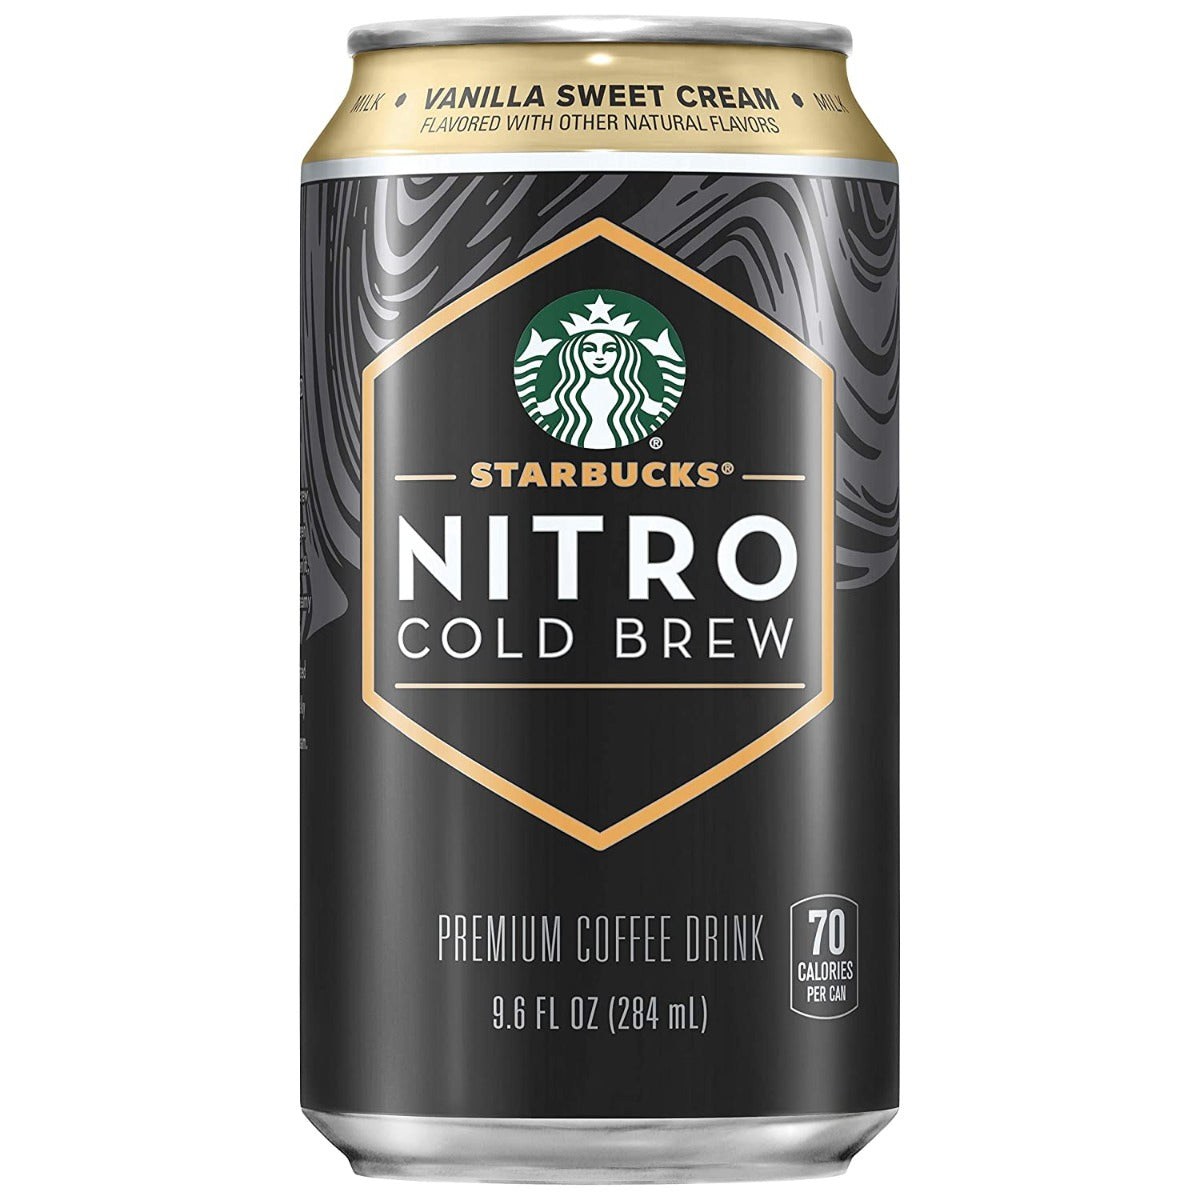 STARBUCKS NITRO COLD BREW VANILA SWEET CREAM PREMIUM COFFEE DRINK 10OZ CAN